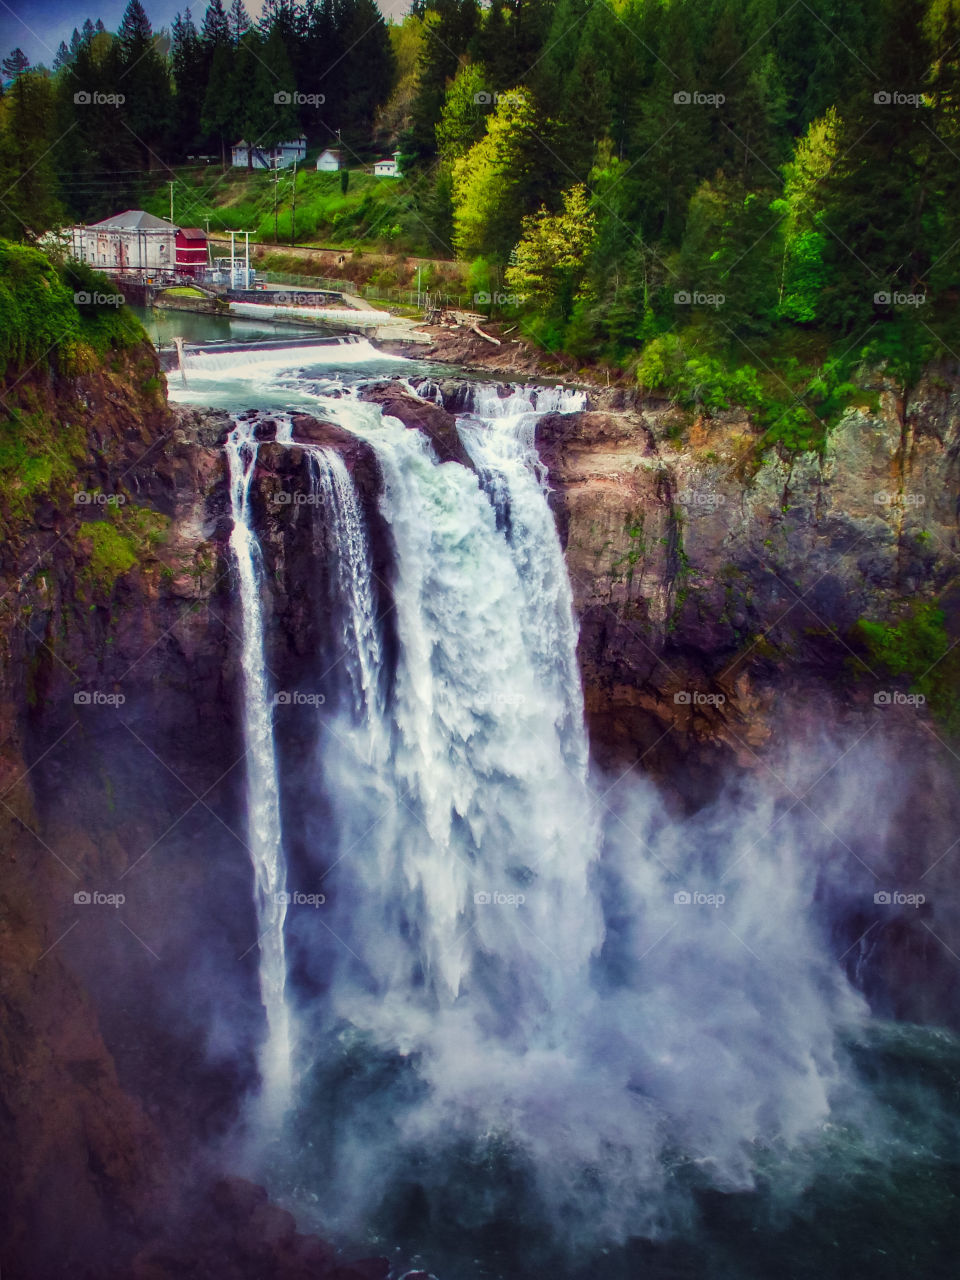 Beautiful waterfalls 😍.